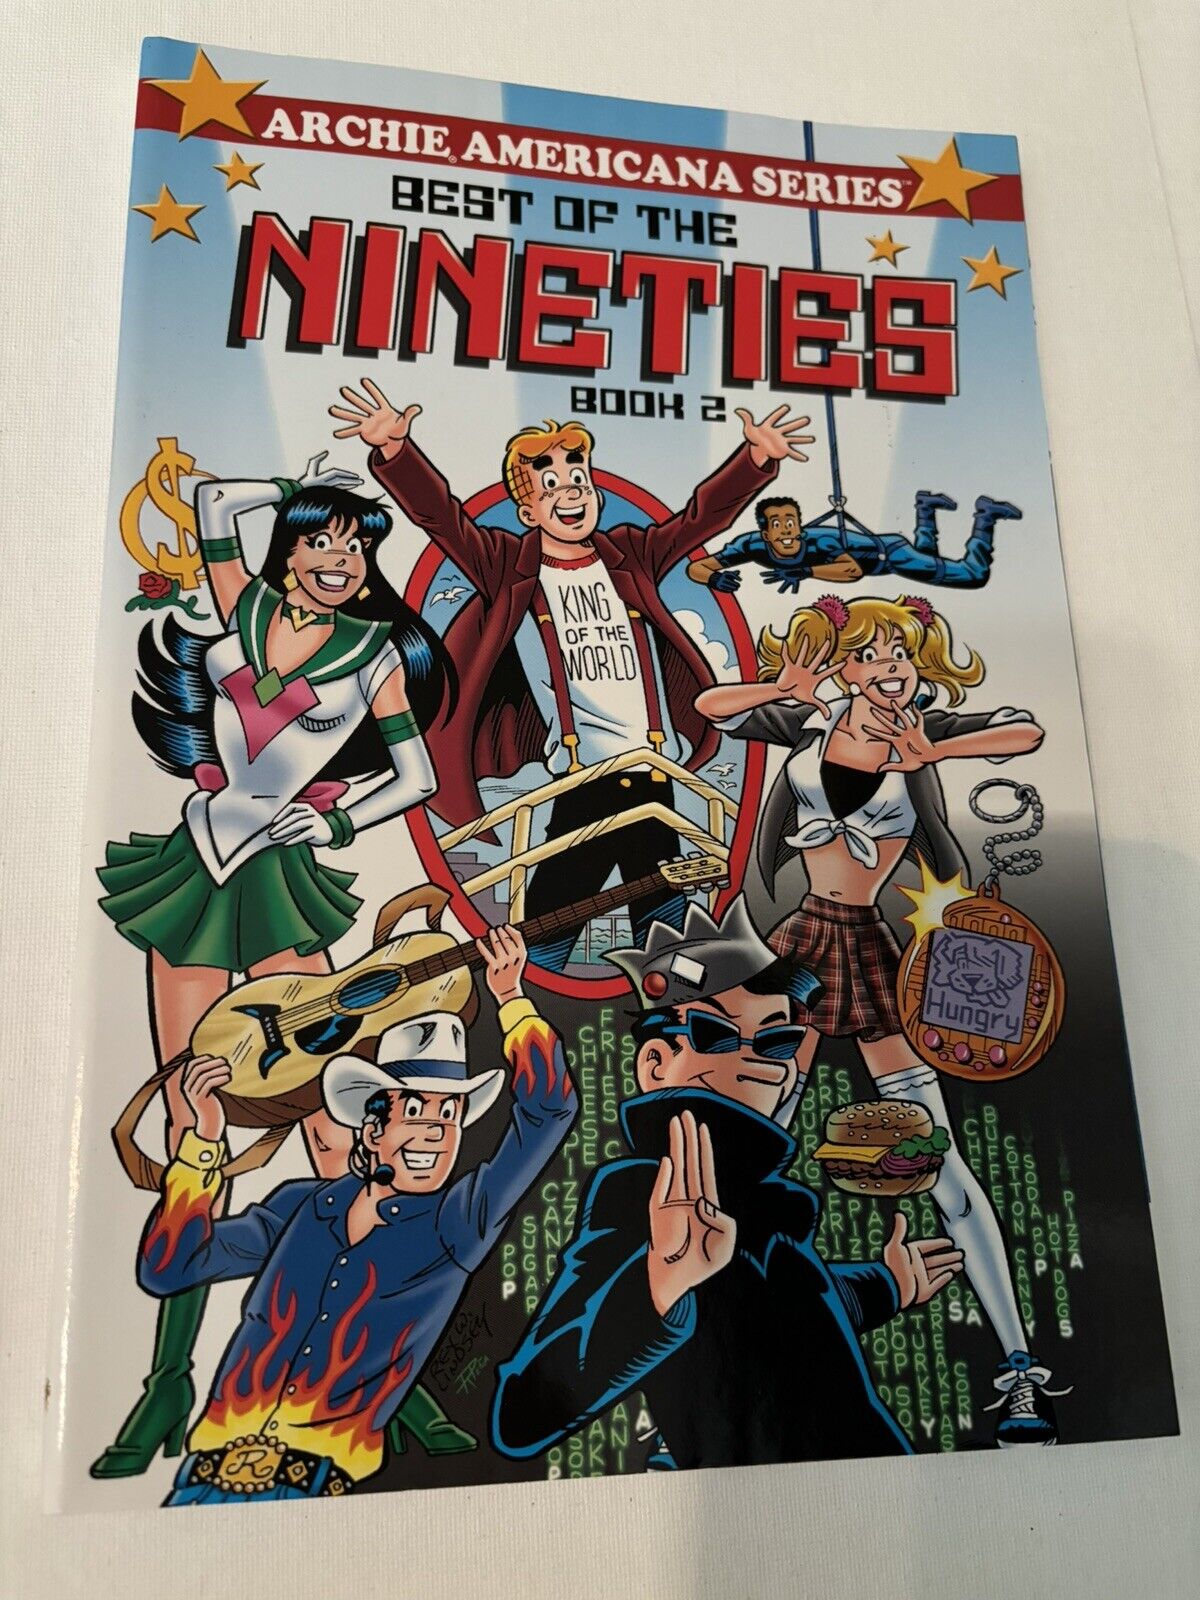 Archie Americana Series Best of the Nineties Book 2